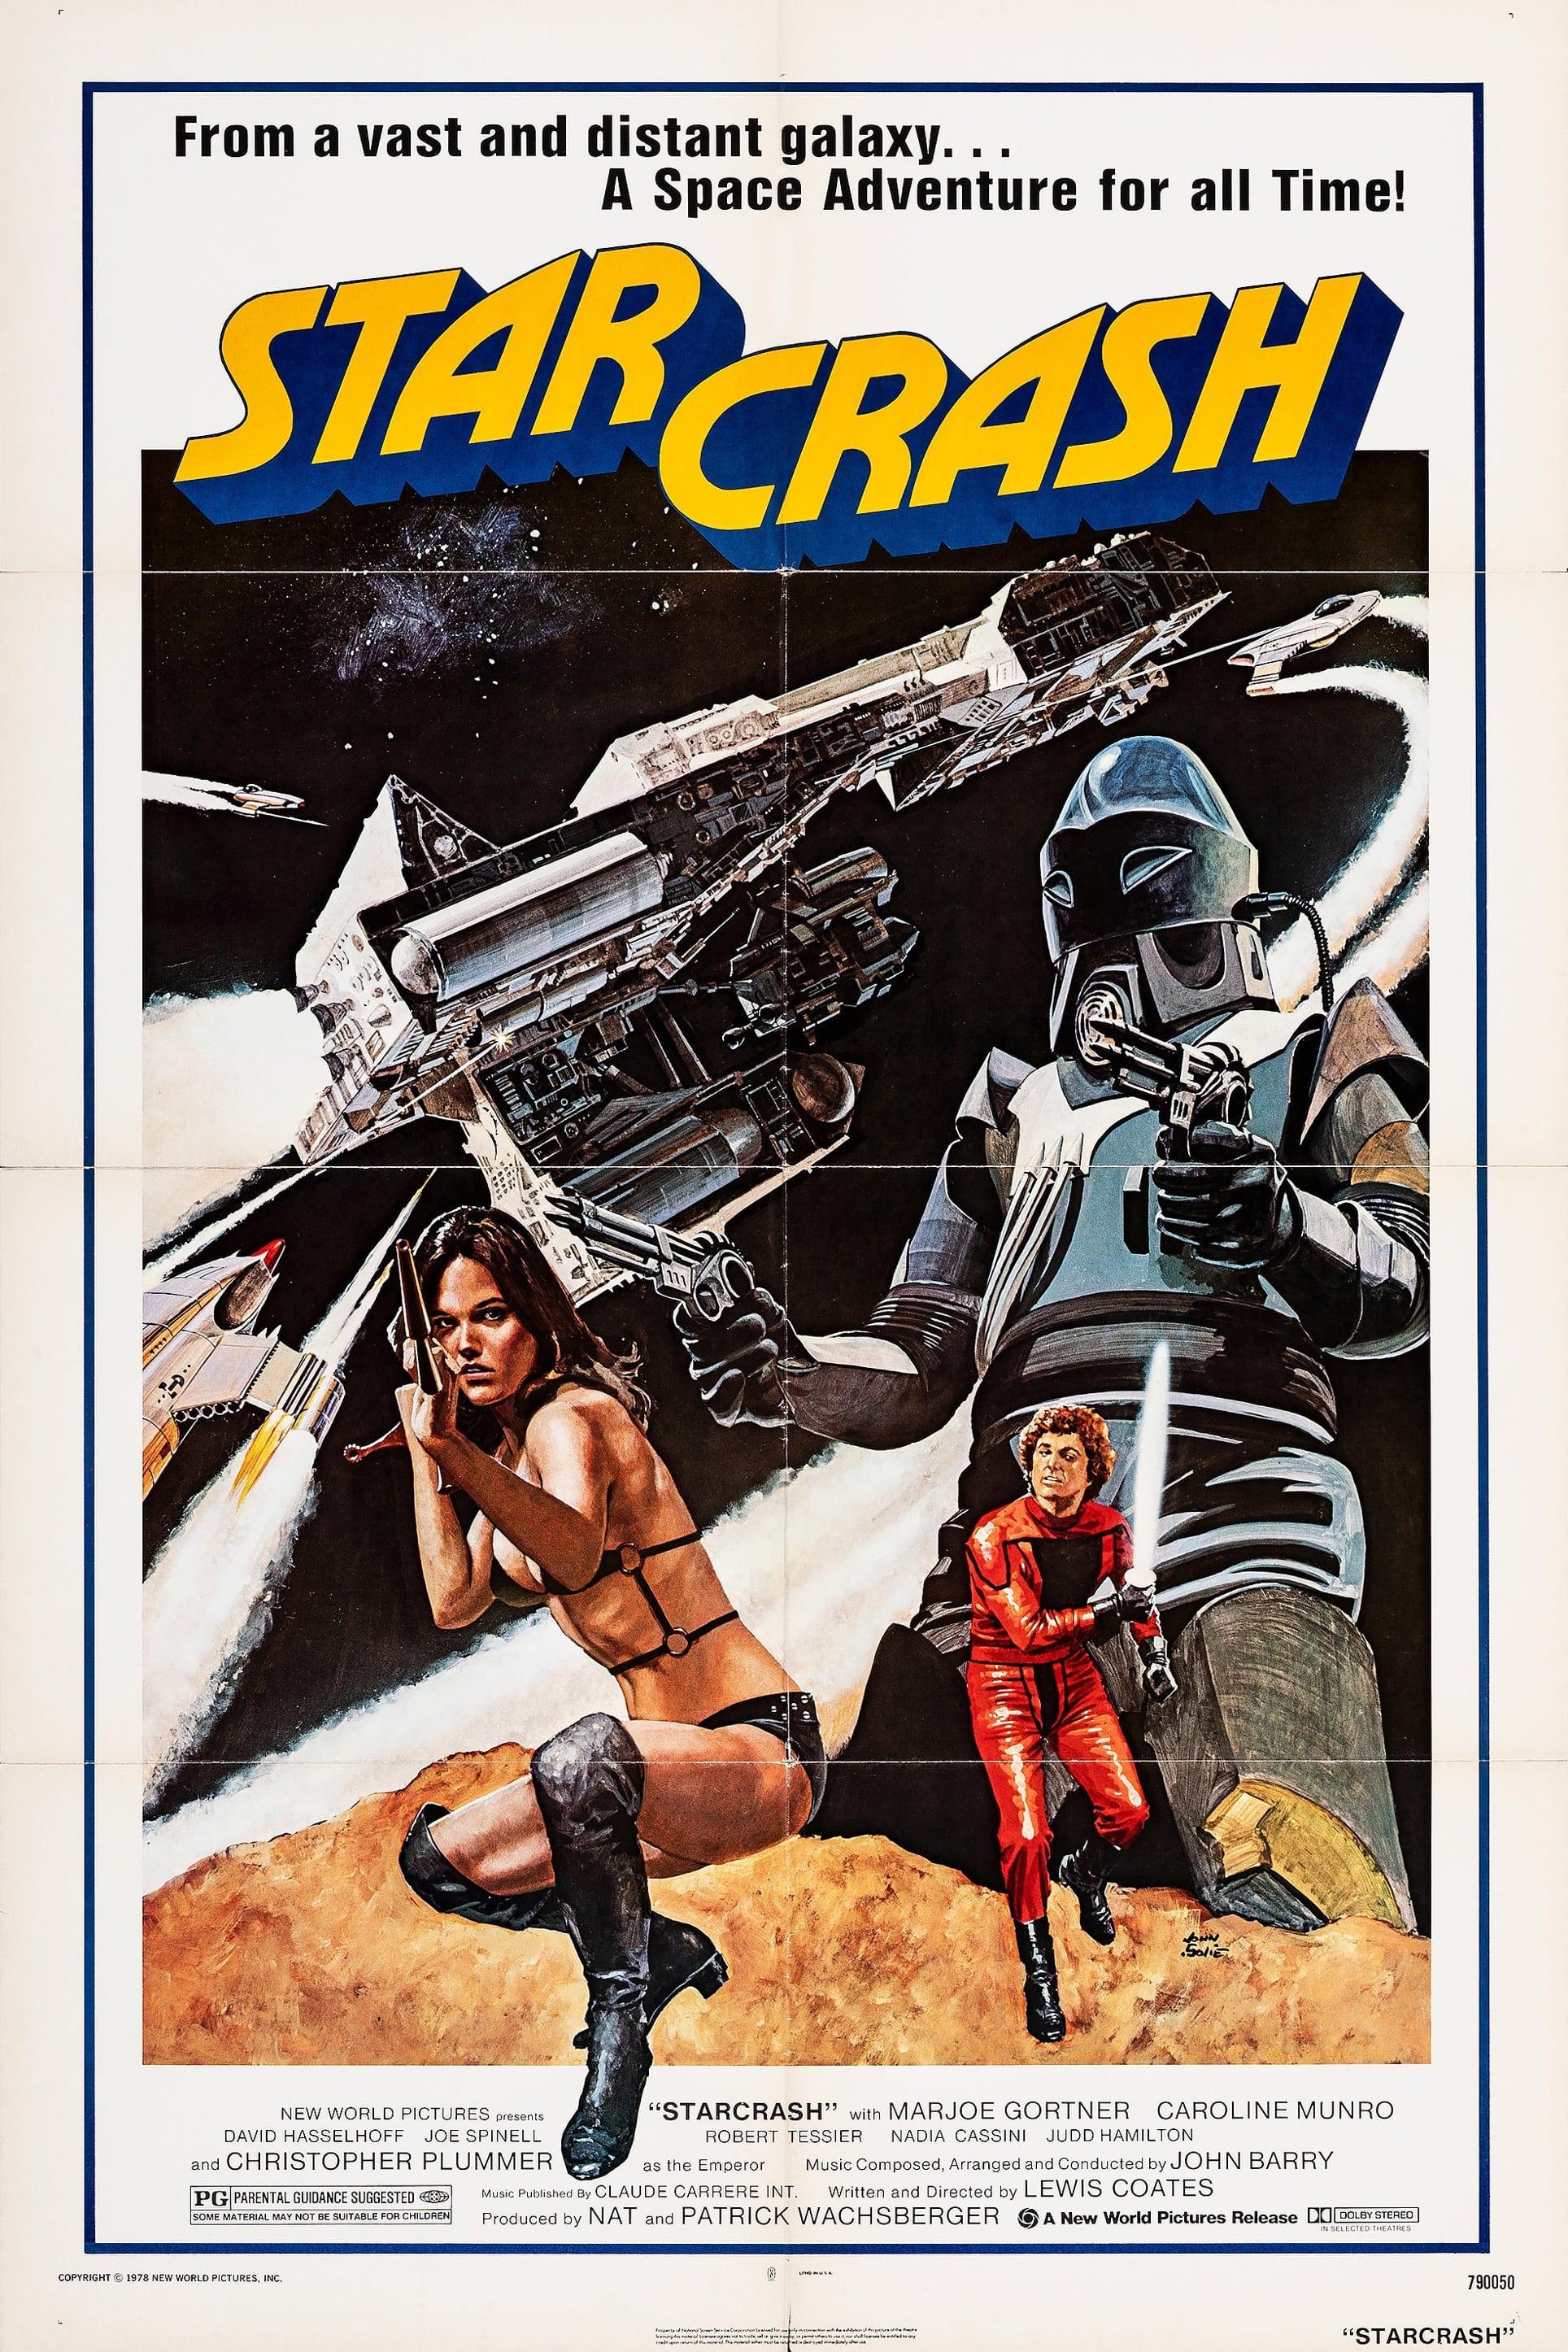 Starcrash poster